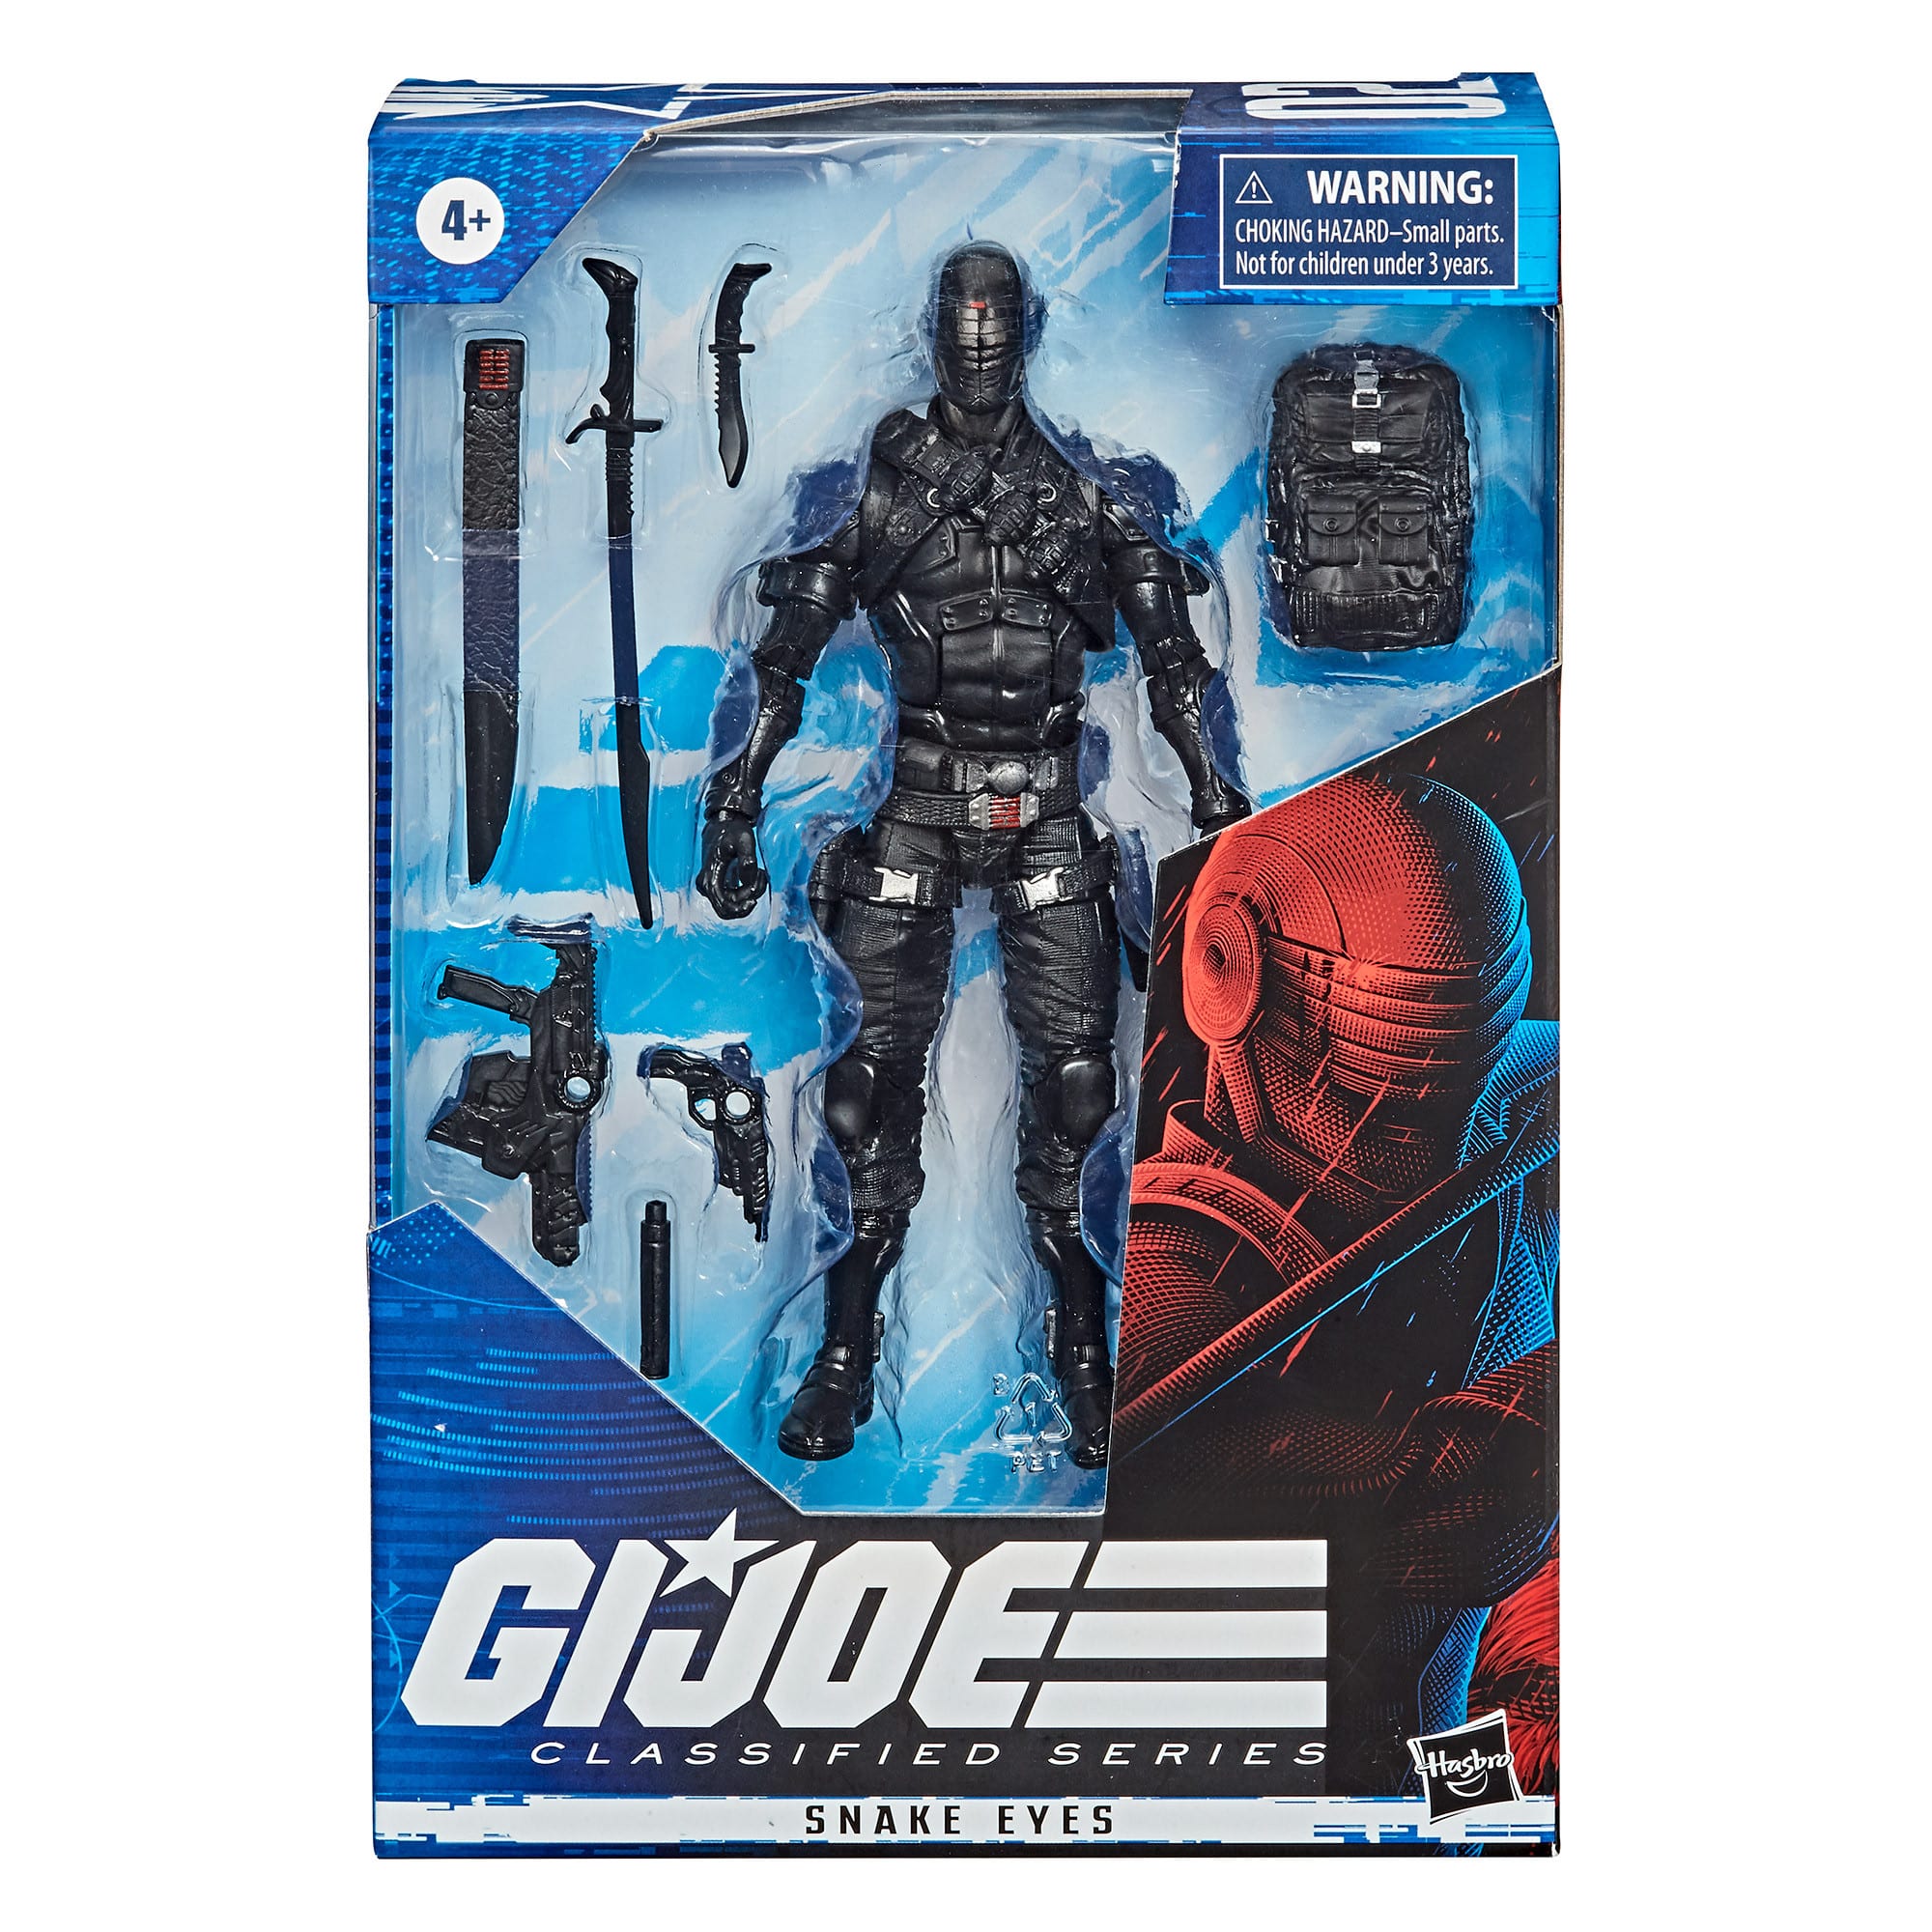 GI Joe - Classified Series - Snake Eyes Action Figure